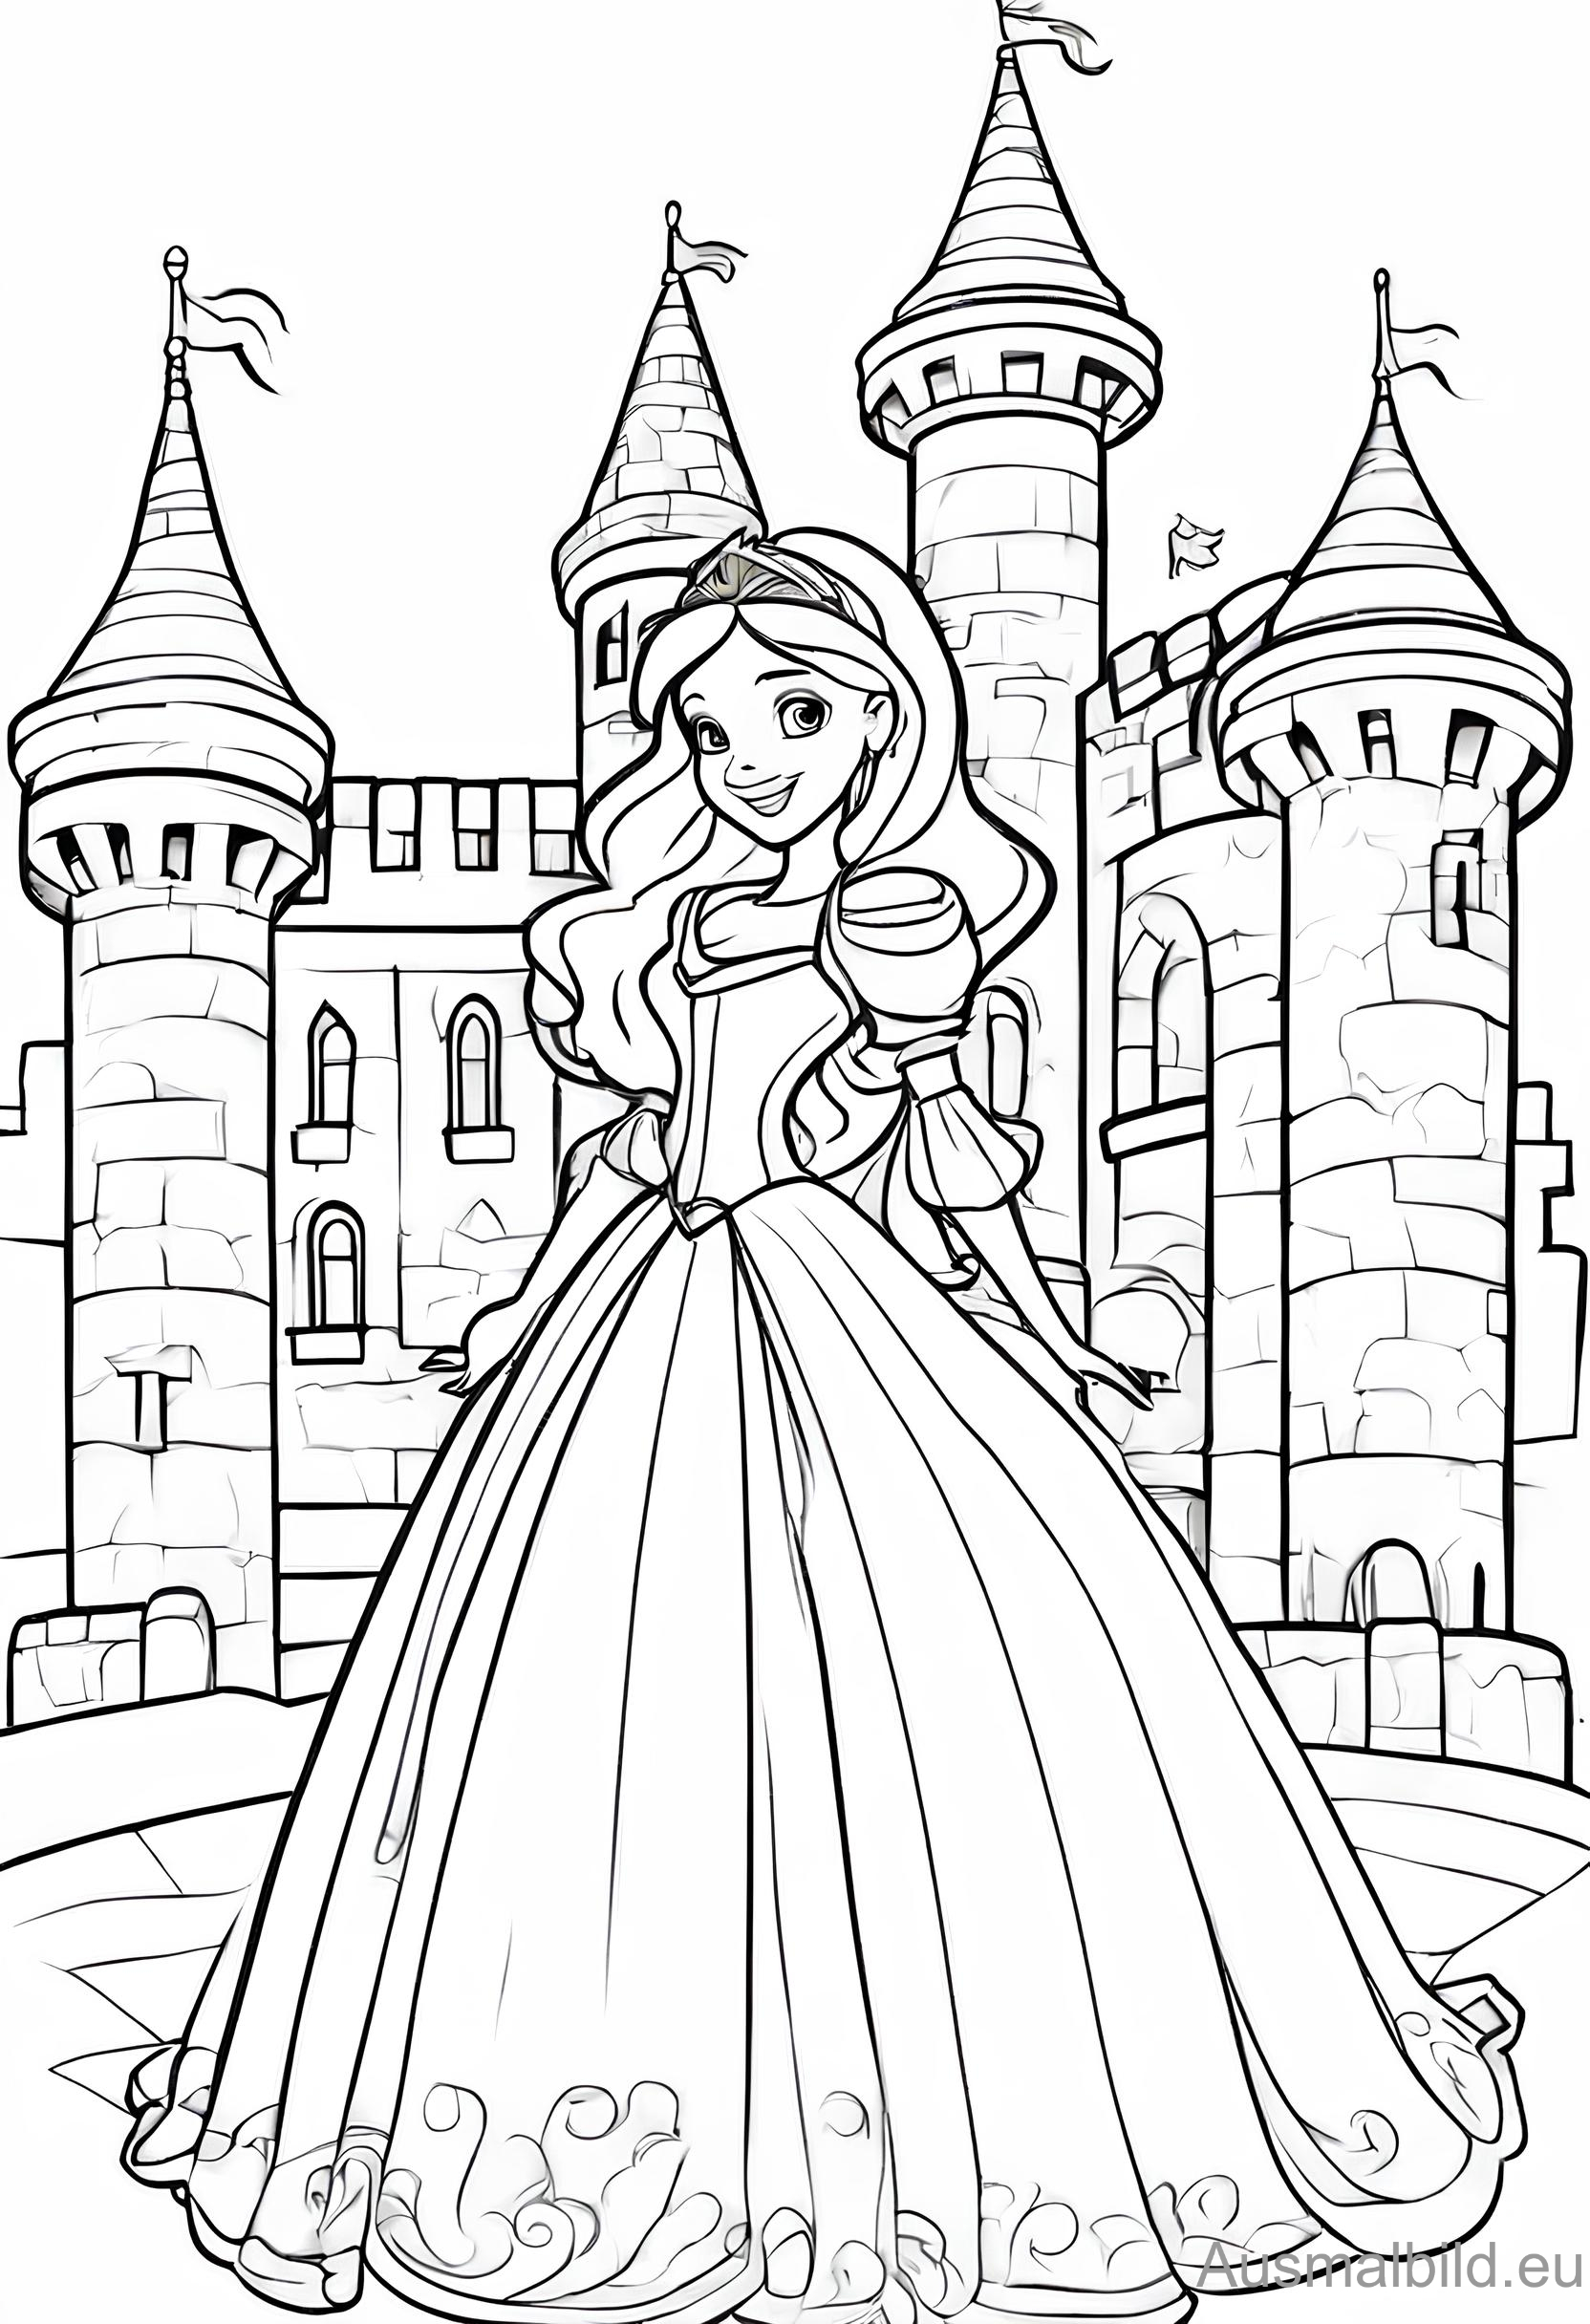 Prinzessin vor dem Schloss